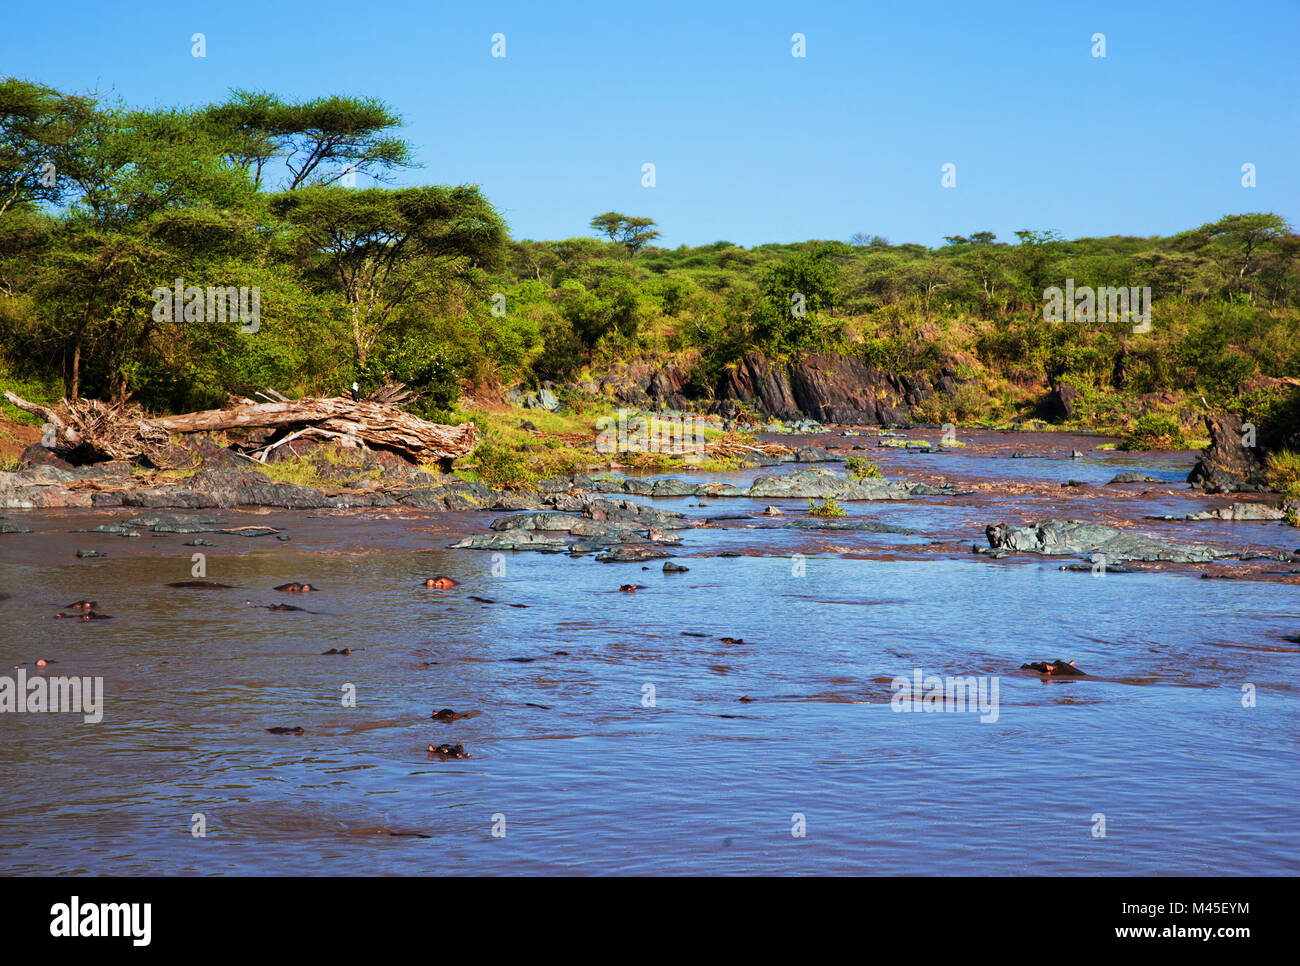 Hippo, Hippopotamus in Fluss. Serengeti, Tansania, Afrika Stockfoto